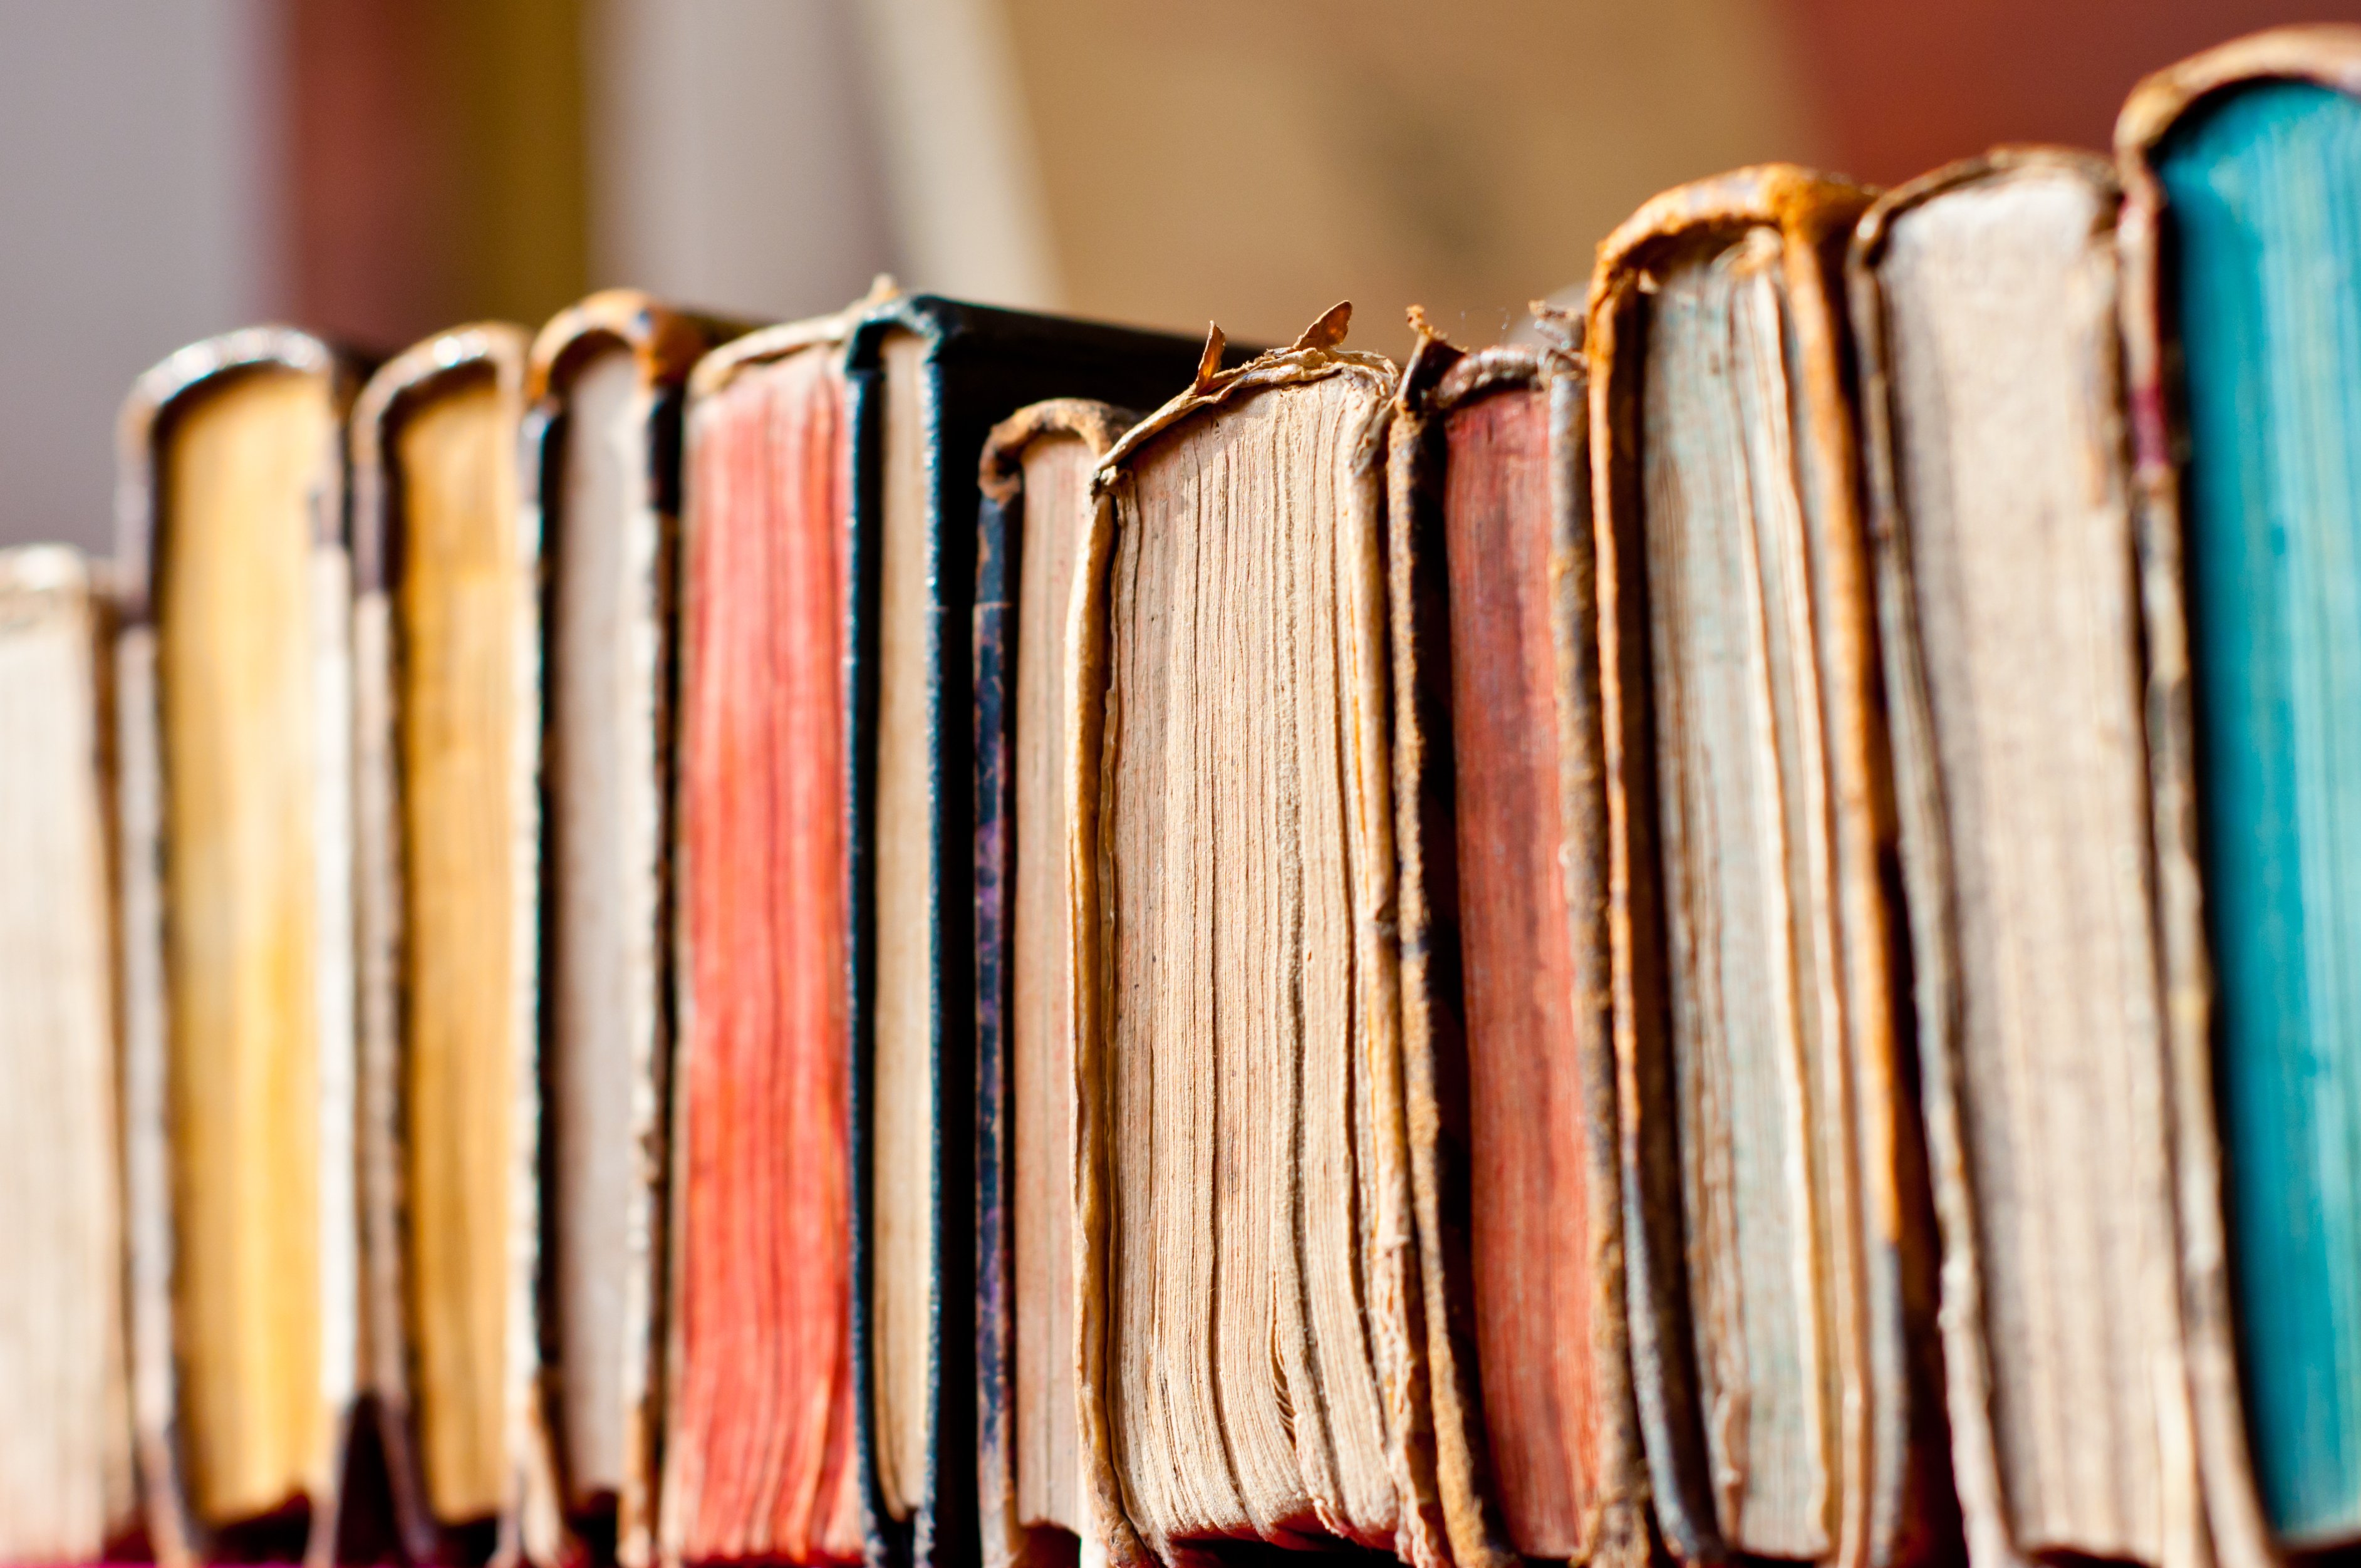 Libros viejos. | Foto: Shutterstock